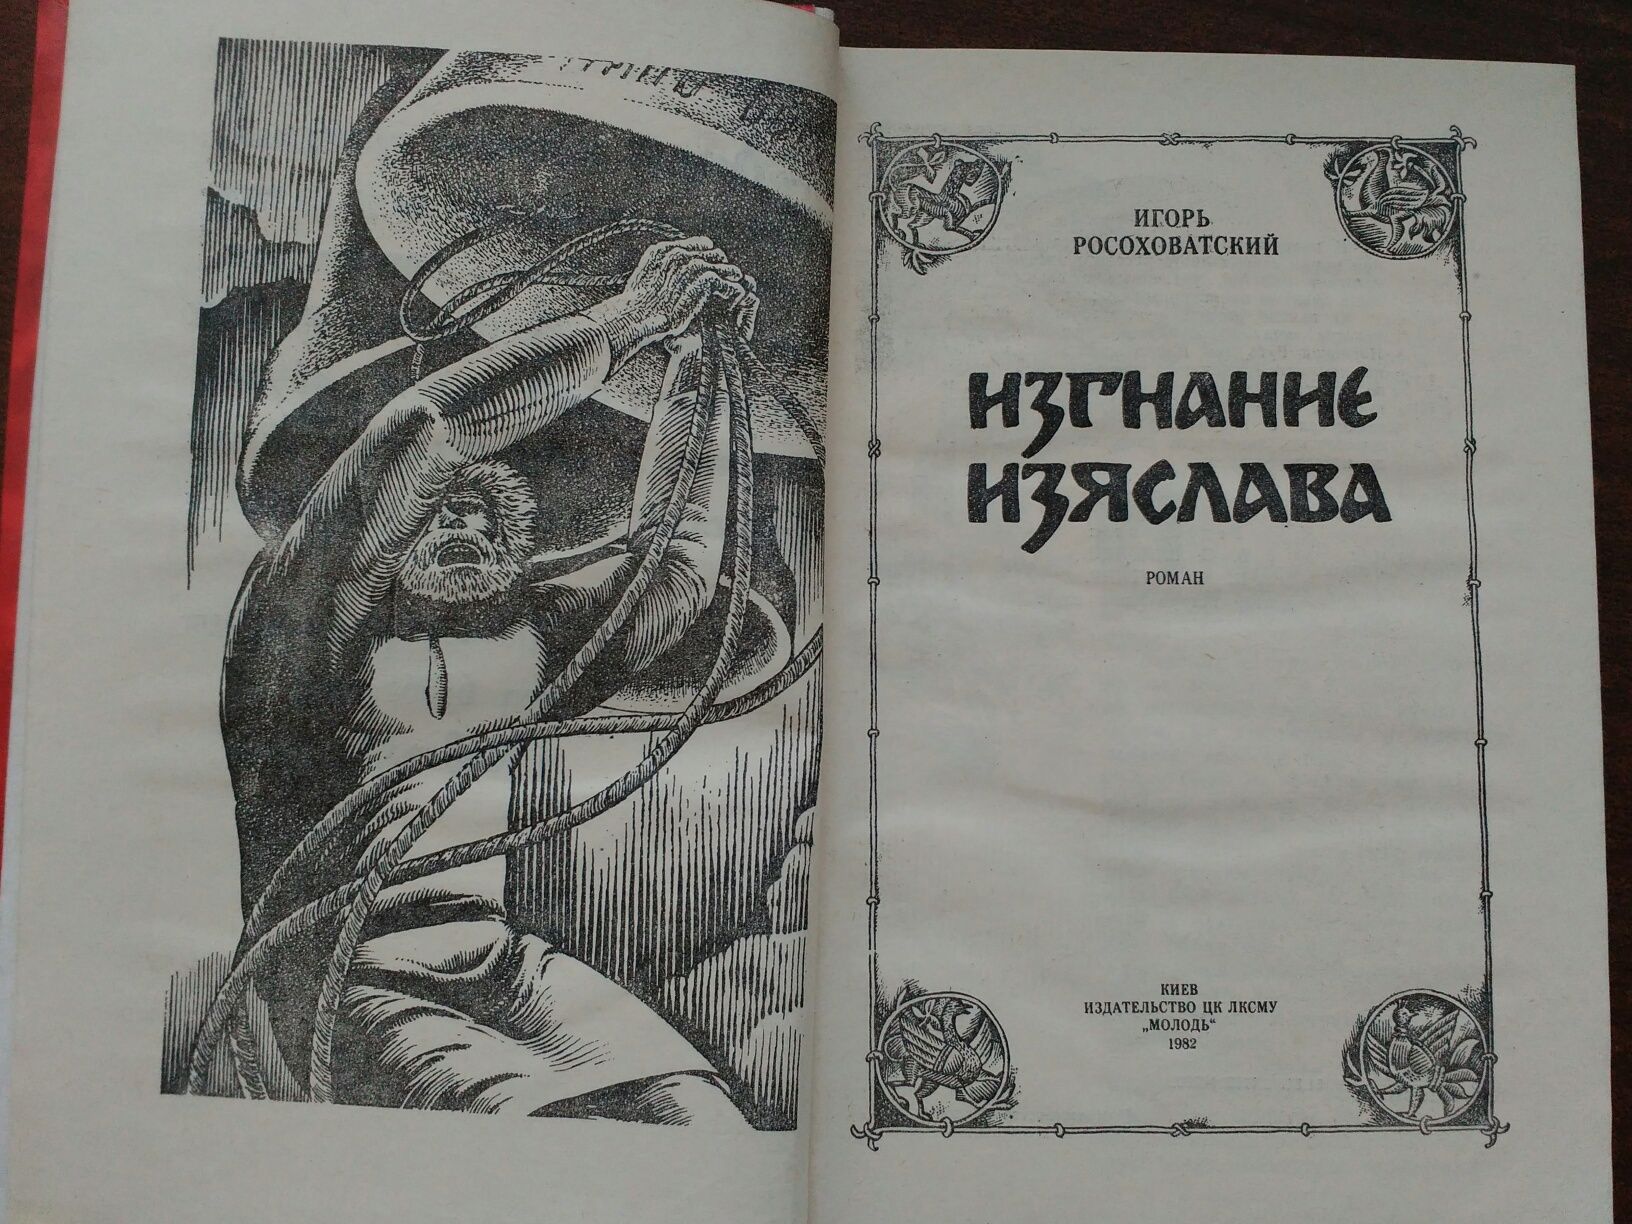 Книга "Изгнание Изяслава" И.Росоховатский